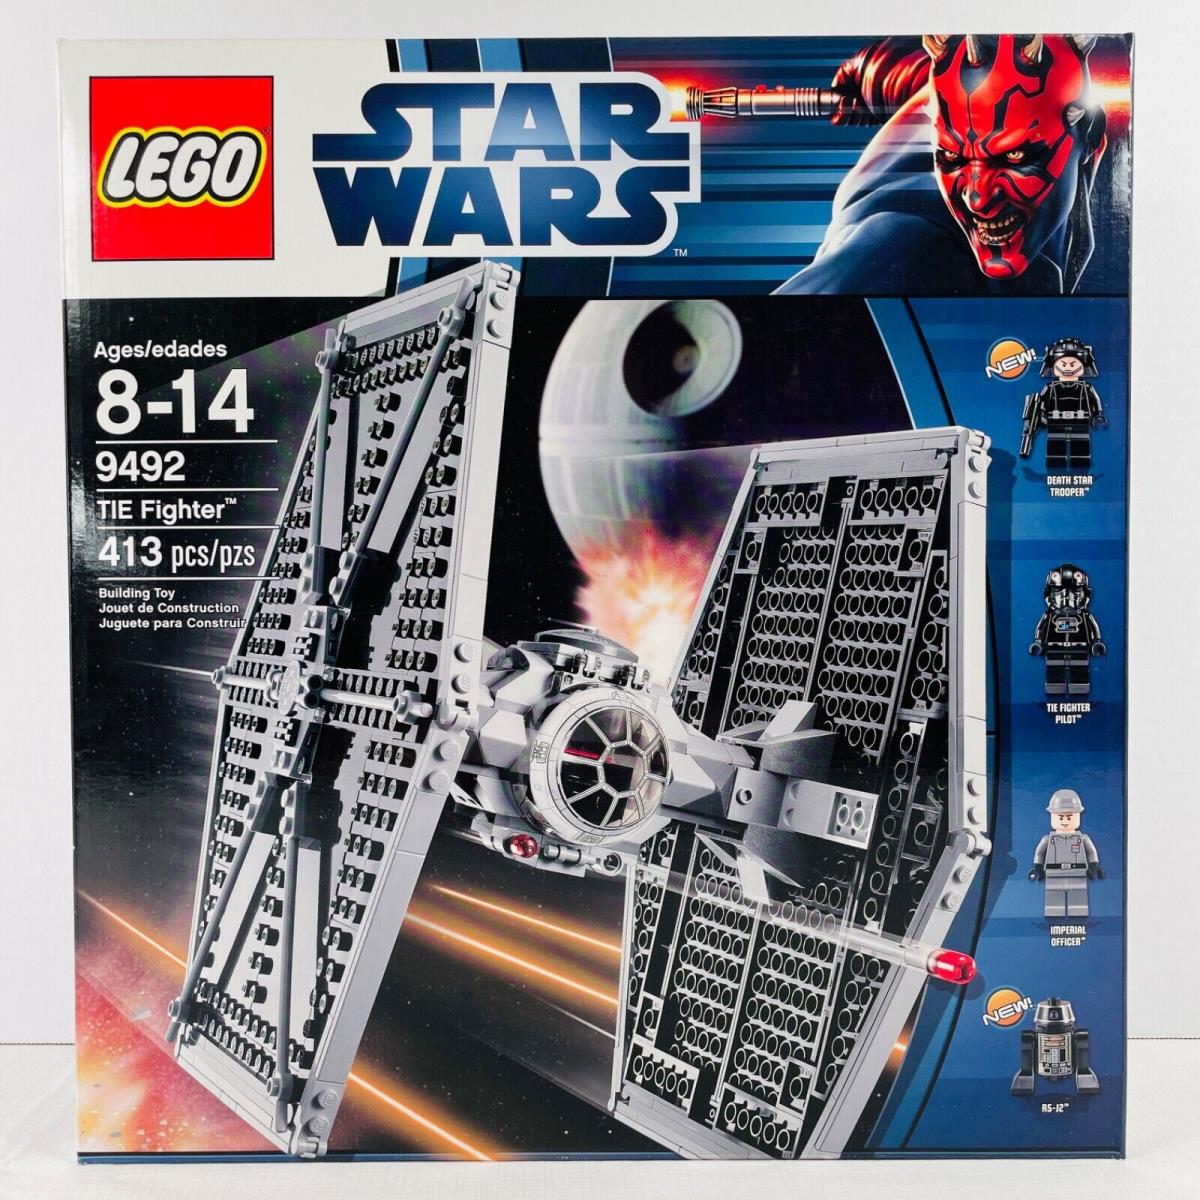 Lego 9492 Star Wars Tie Fighter with Minor Box Wear - Retired